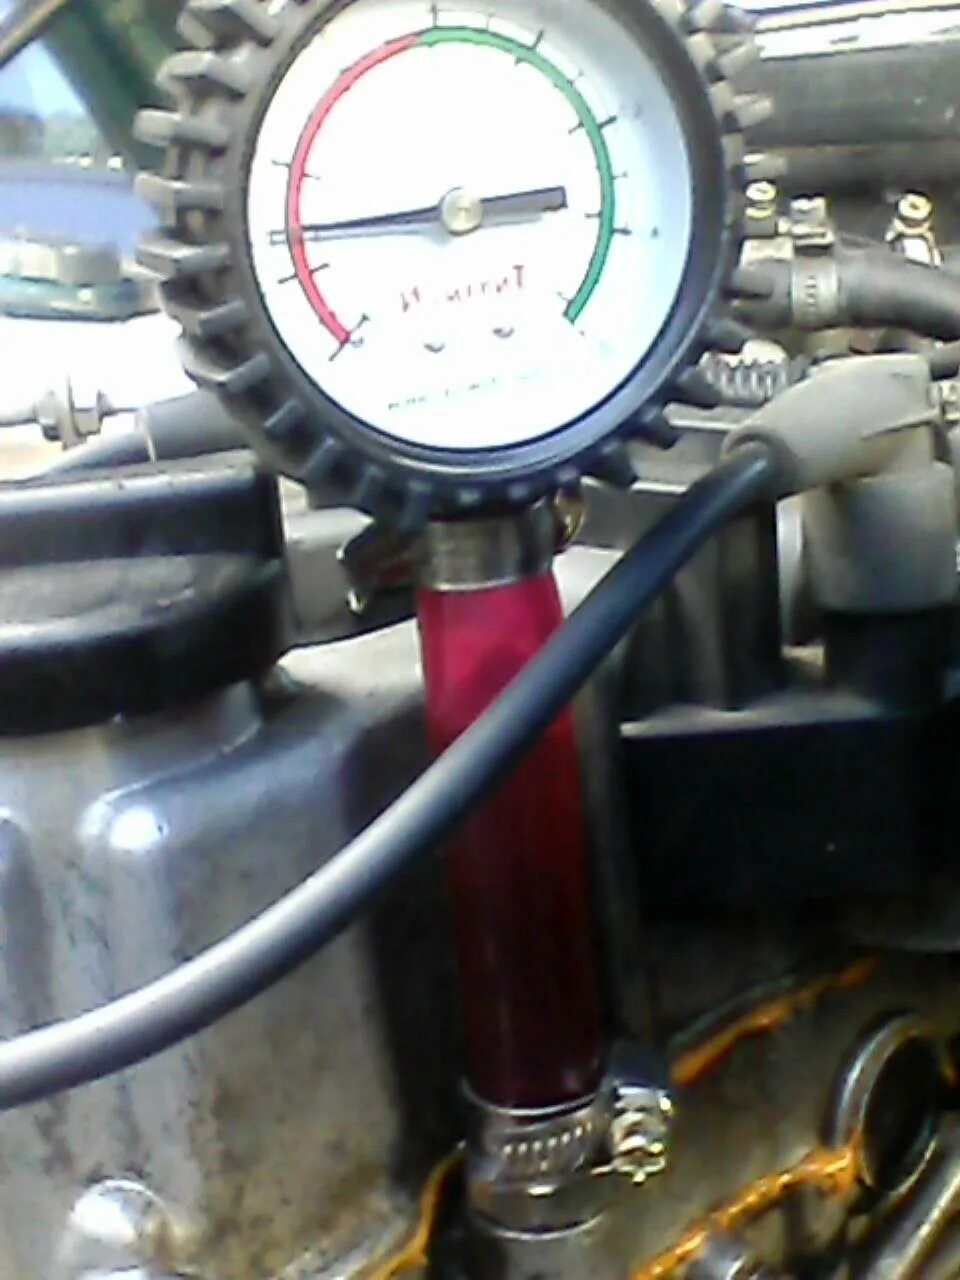 Масляный манометр ВАЗ 2112. Замер давления масла 2112 16кл. Манометр для измерения давления масла в двигателе ВАЗ 2112. ВАЗ 2112 манометр давления масла. Давление масла в двигателе ваз 2112